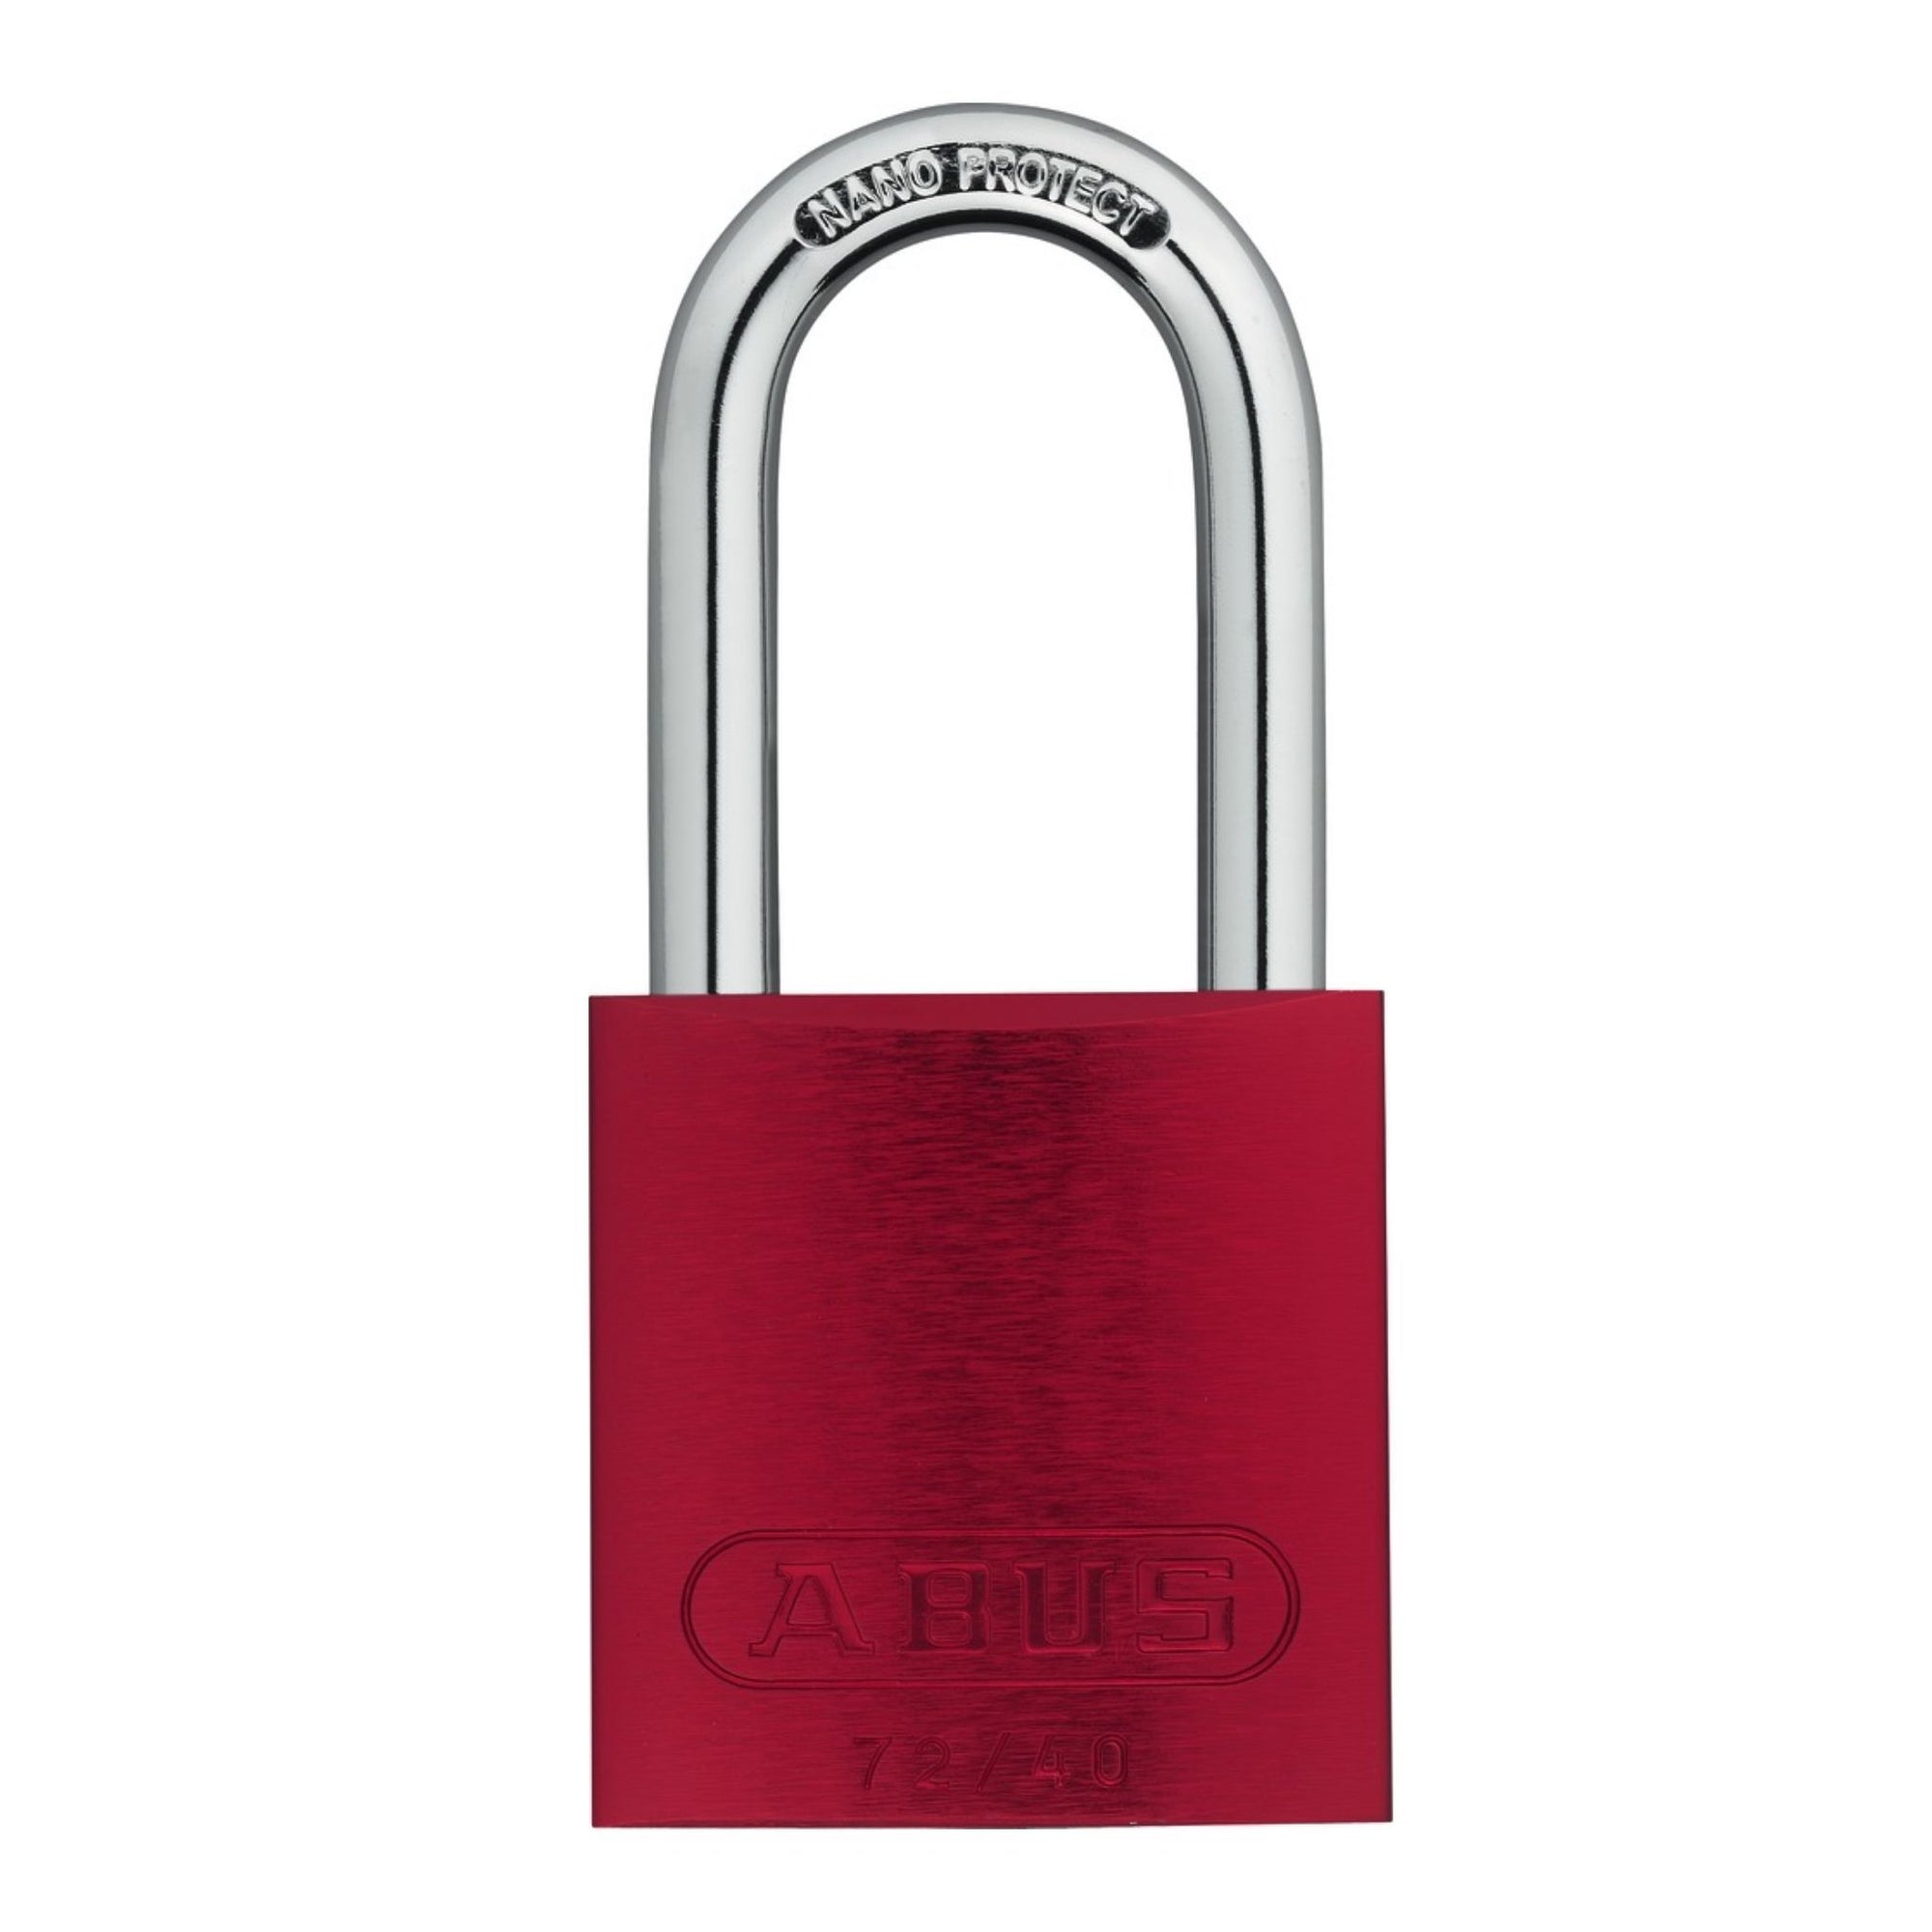 Abus 72/40HB40 KA TT00036 Red Titalium Safety Padlock with 1-1/2" Shackle, Keyed Alike to Match Existing Key Number KATT00036 - The Lock Source